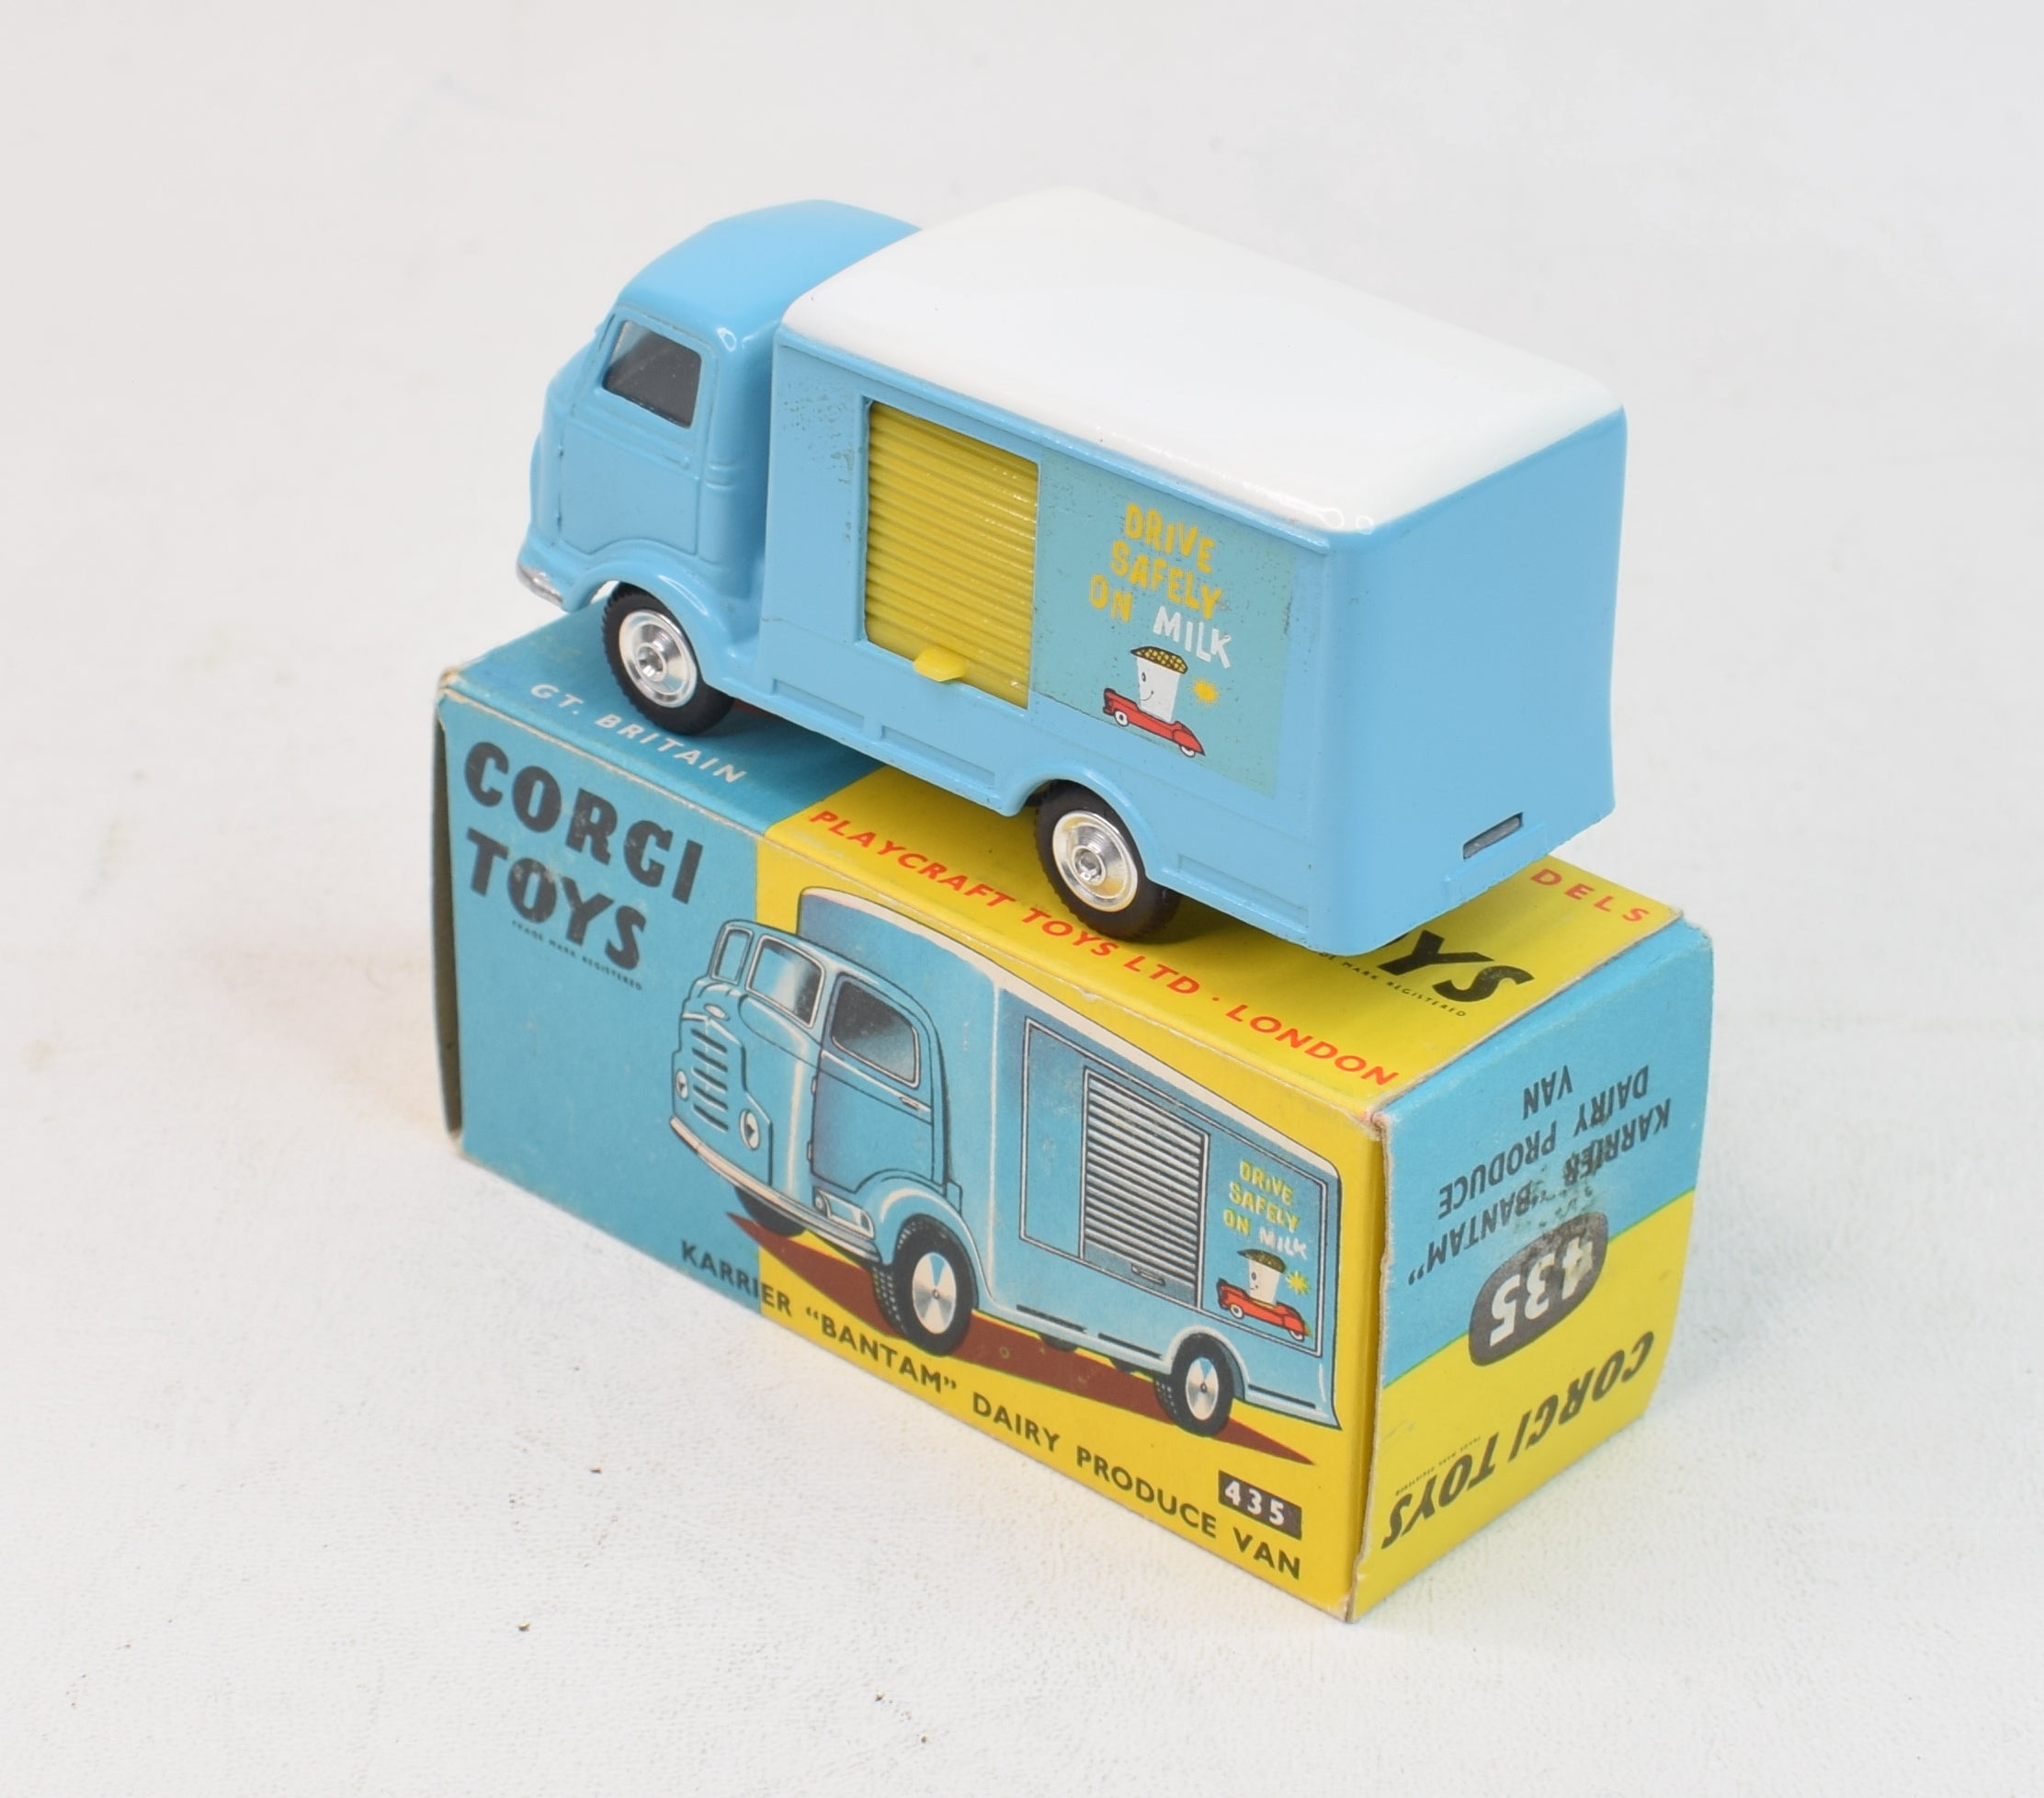 Corgi toys 435 Karrier Bantam Dairy Produce Virtually Mint/Boxed 'Wick ...